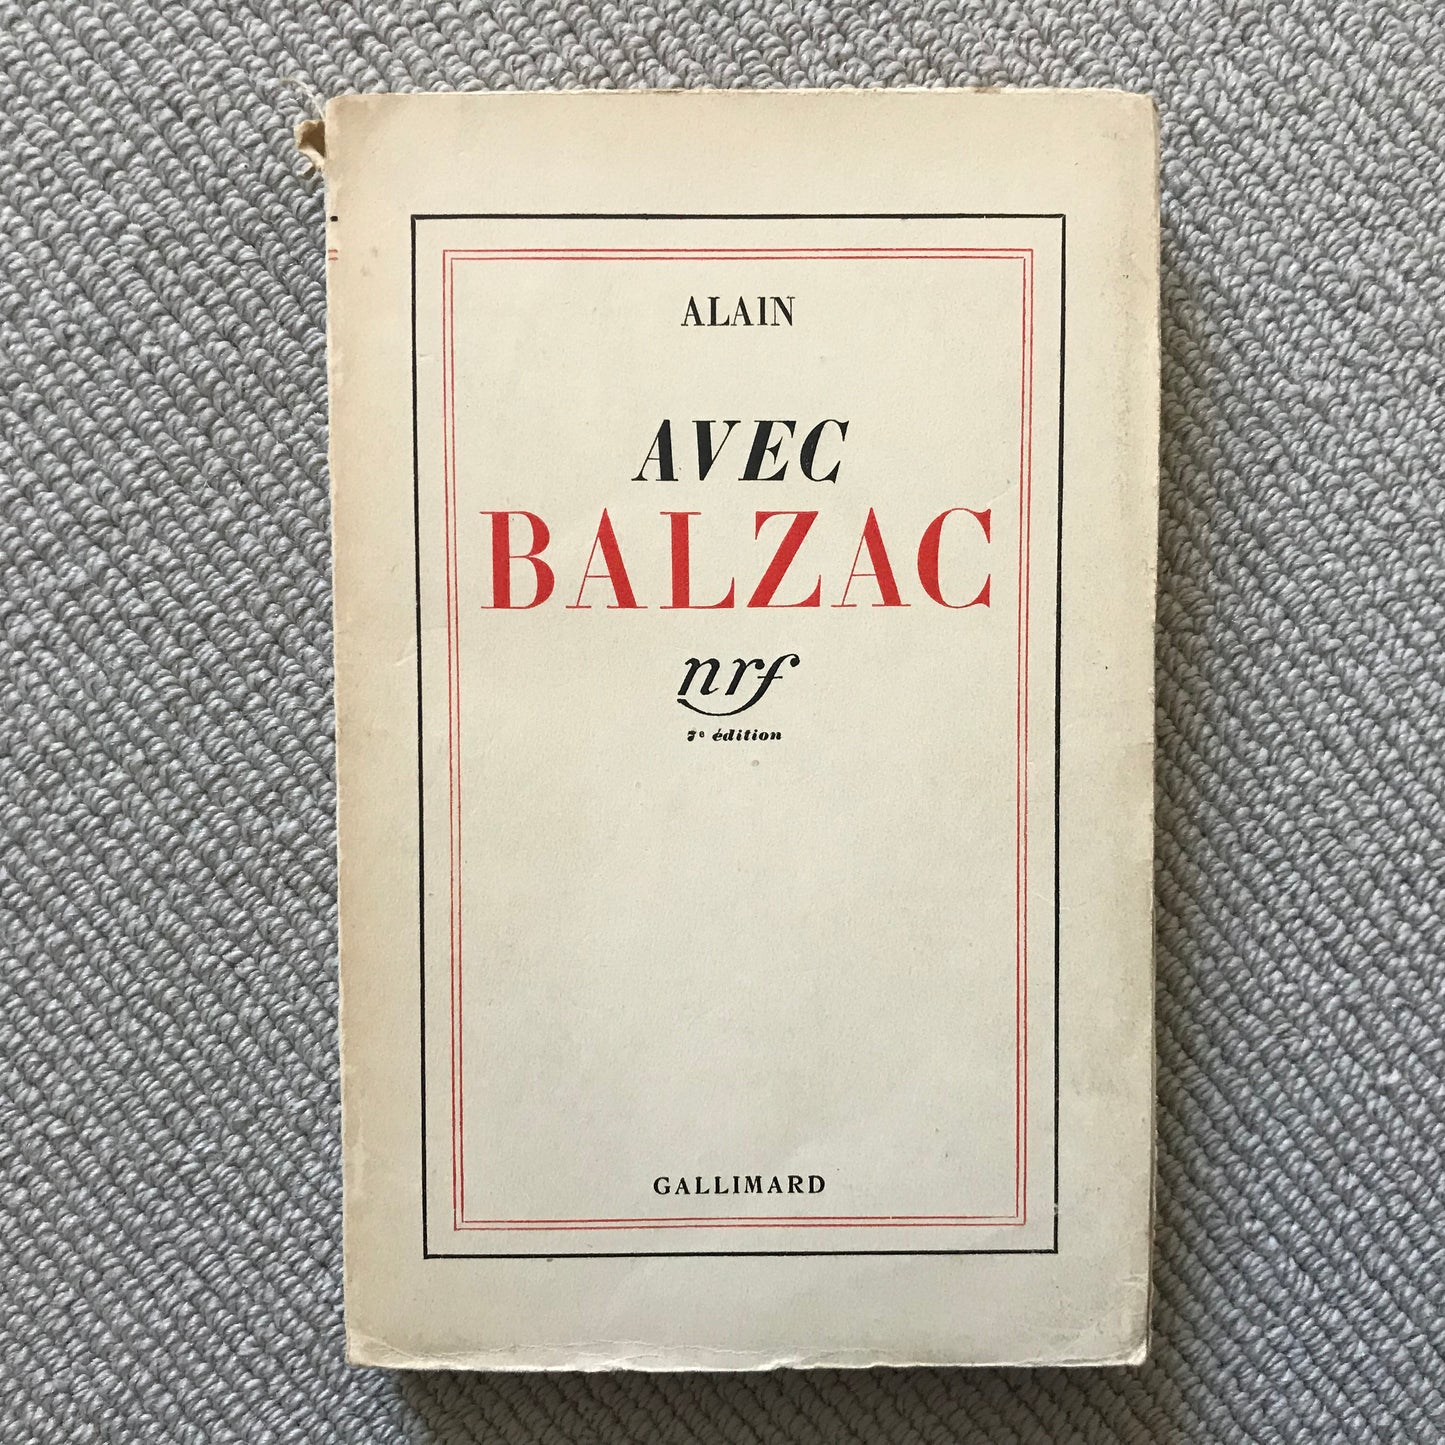 Alain - Avec Balzac